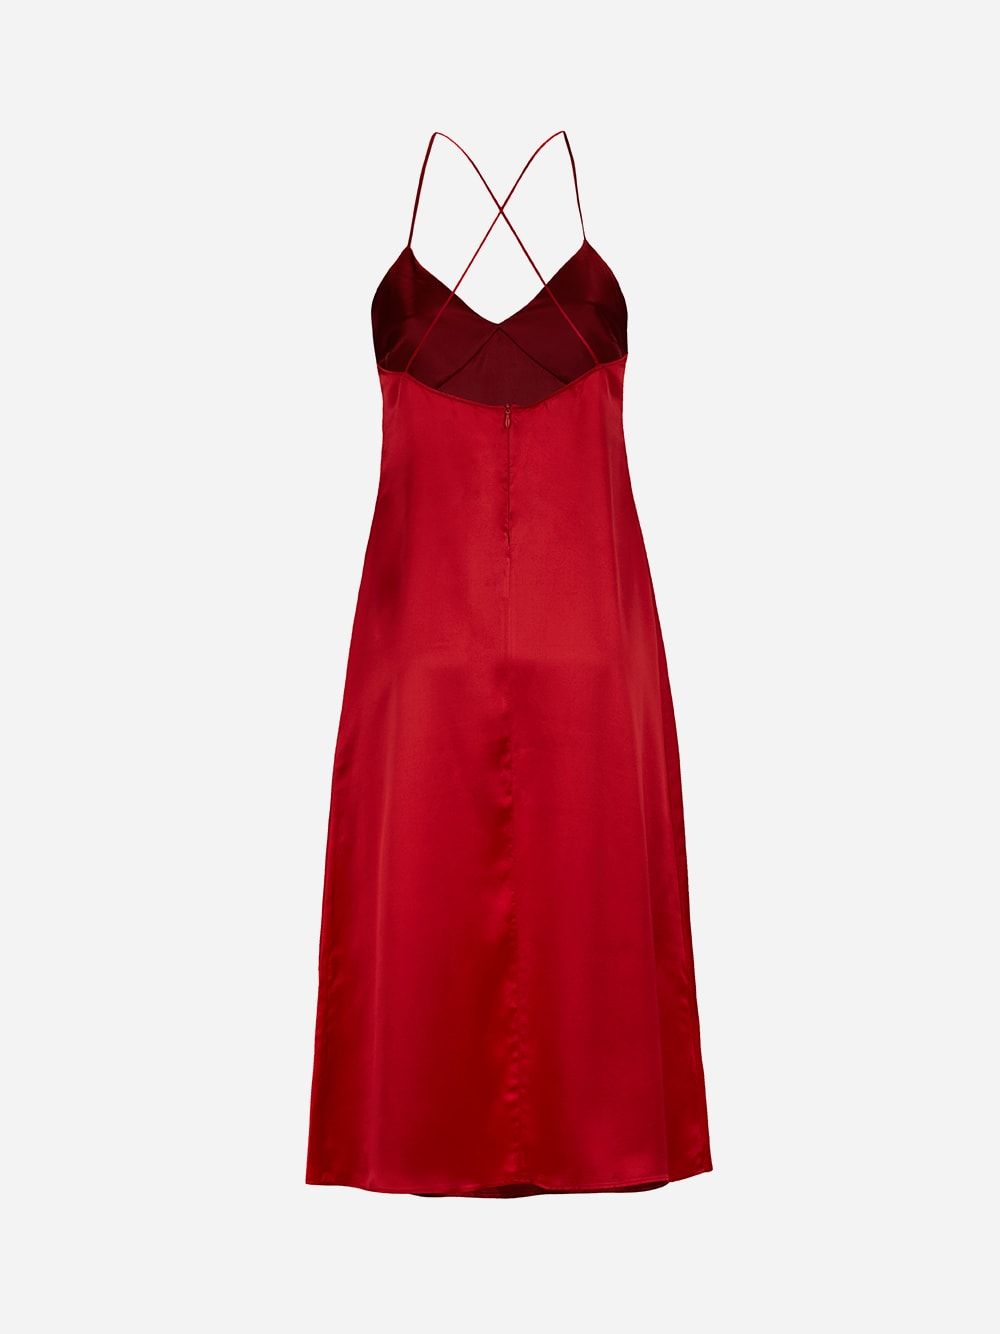 Red Dress | On Atlas